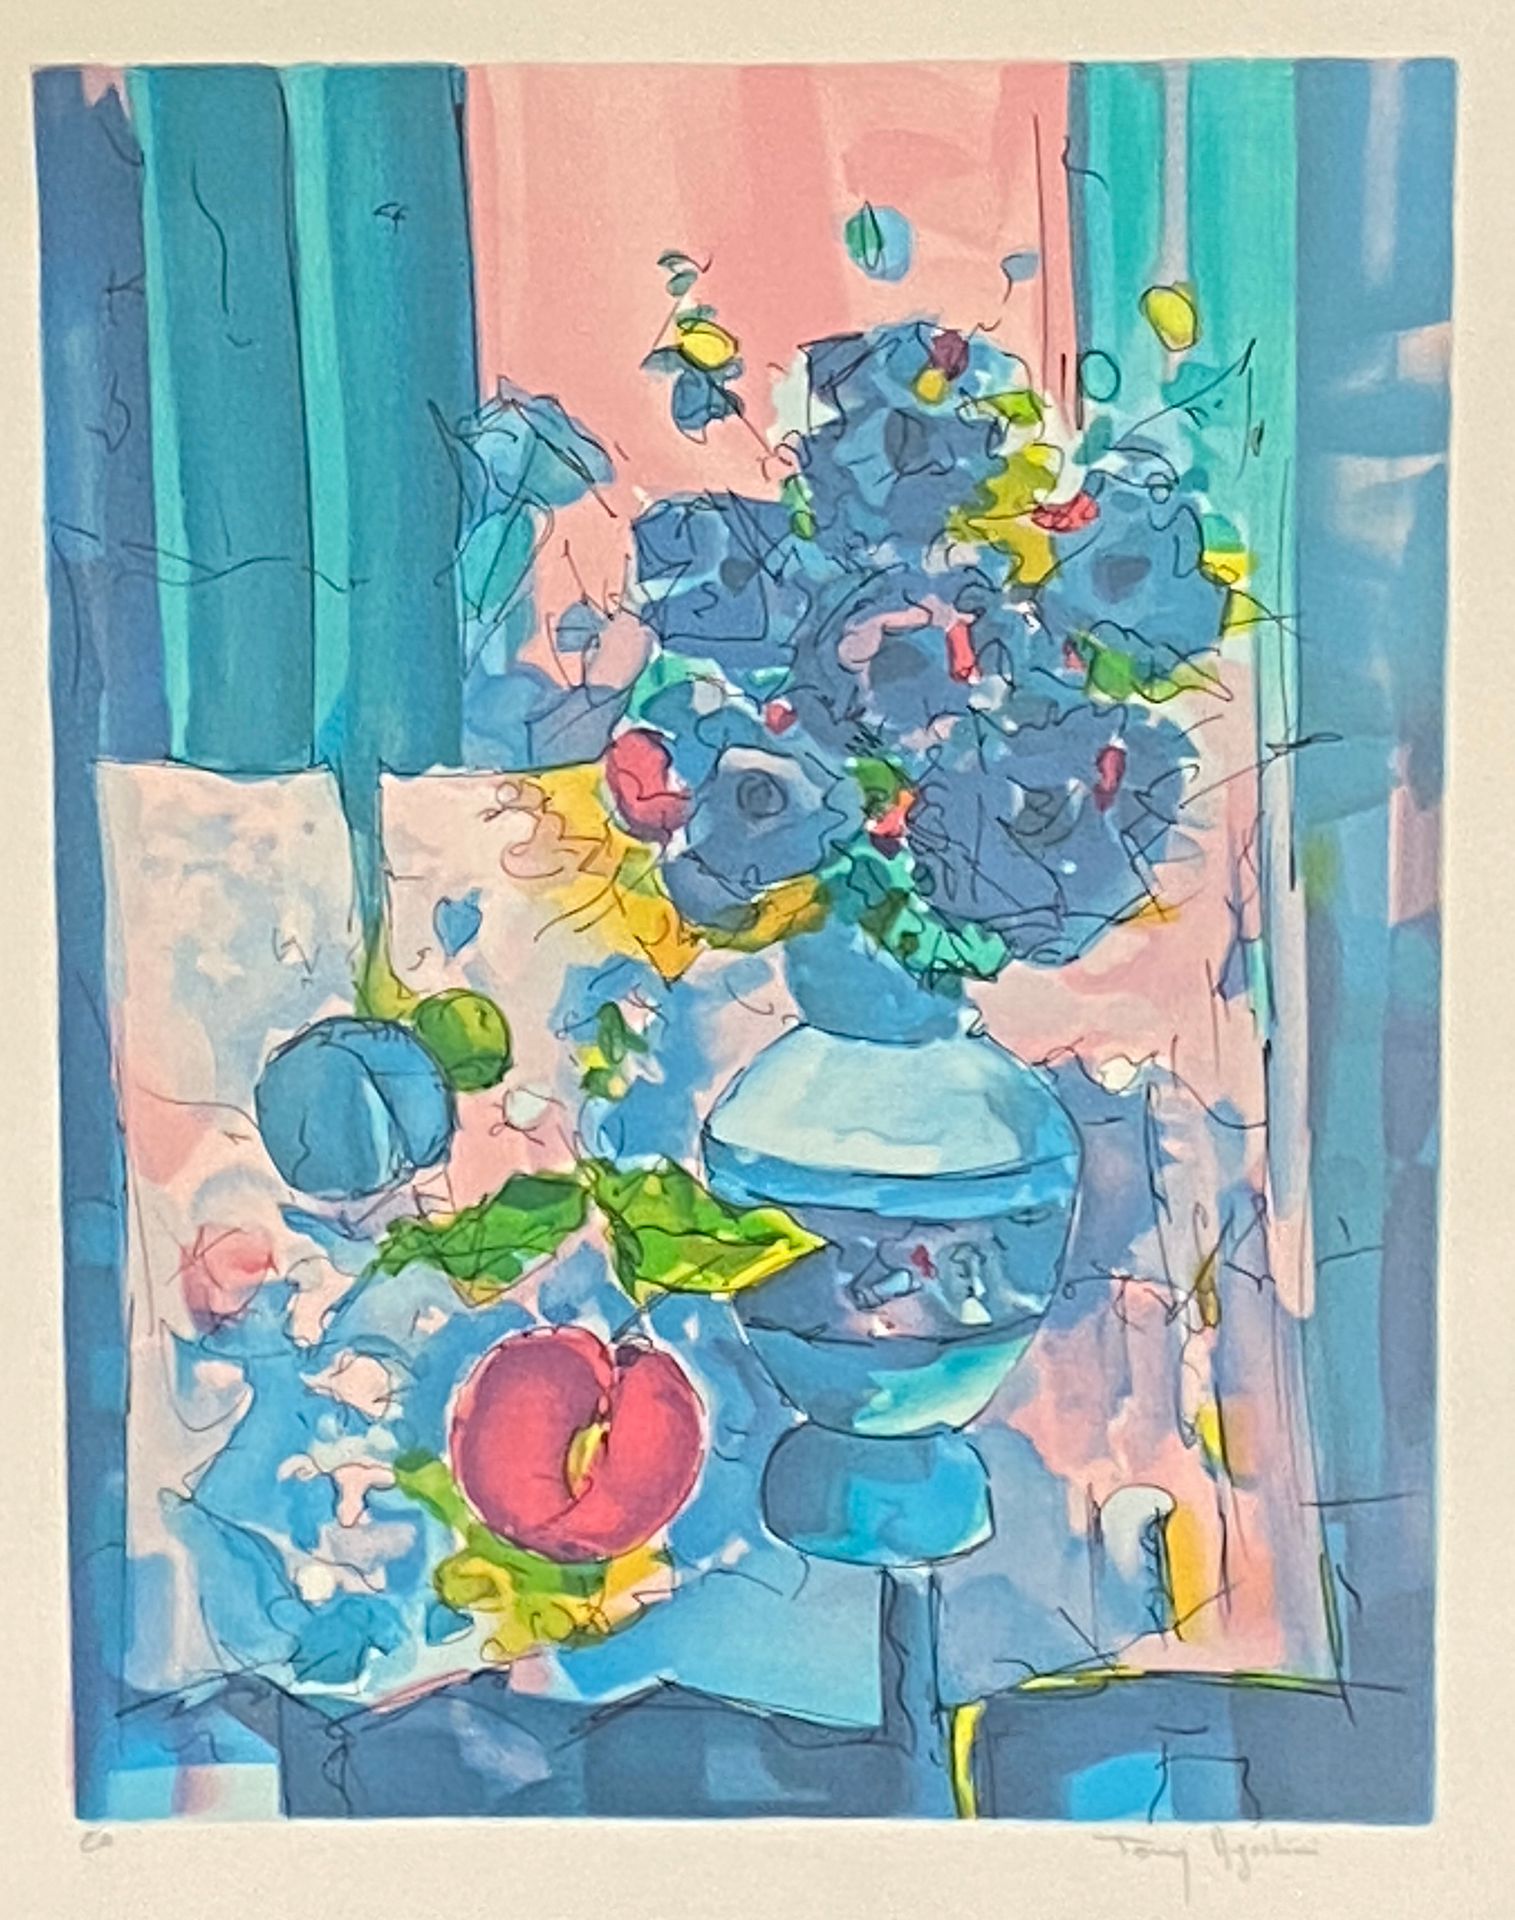 Null Tony AGOSTINI

静物

三幅彩色石板画组曲

艺术家的证明，在空白处会签。

尺寸：43 x 34厘米（观展）和22,5x18厘米（观展&hellip;